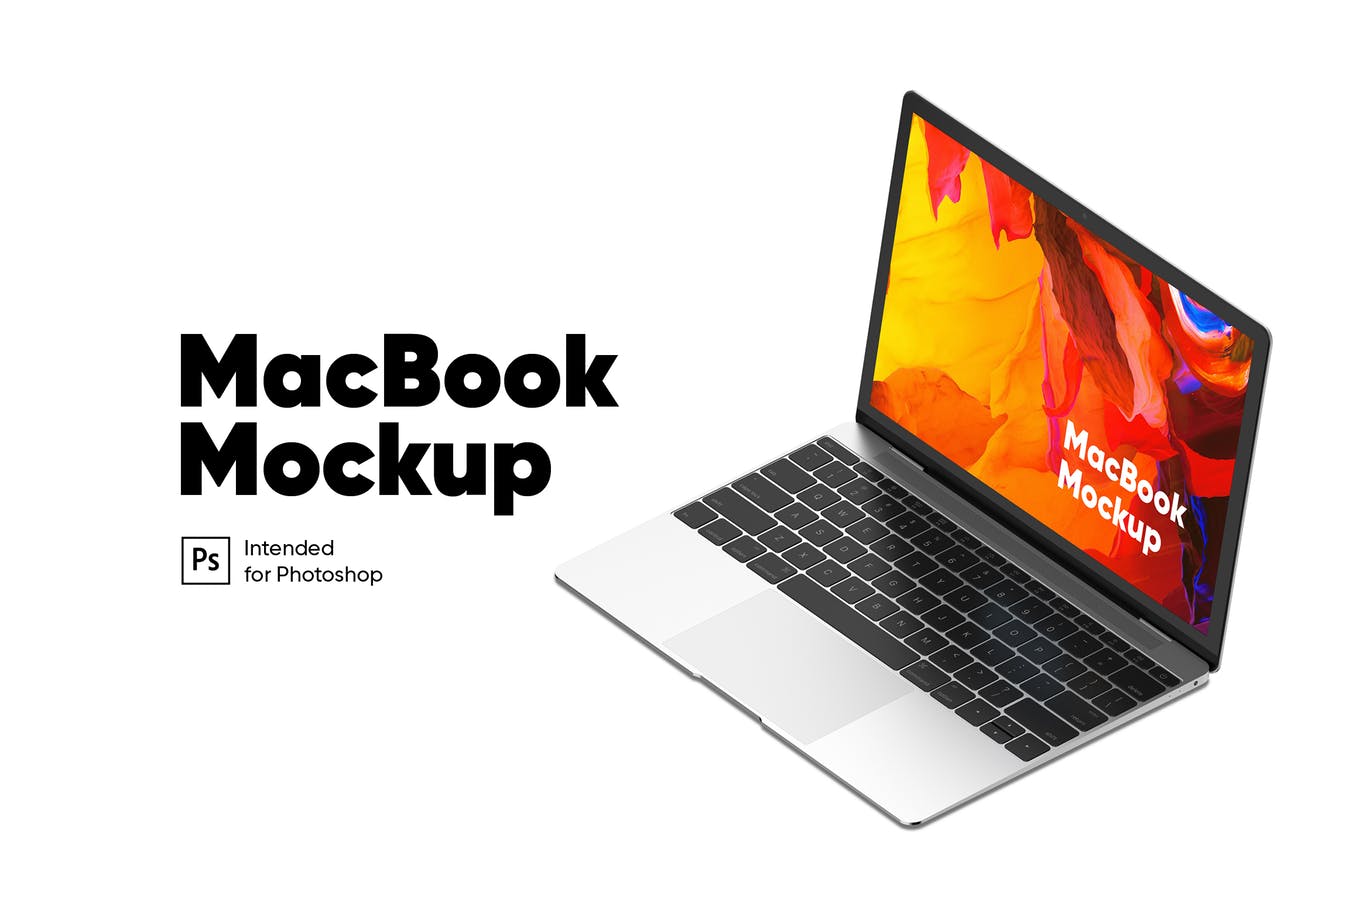 MacBook超极本UI作品屏幕预览第一素材精选样机 MacBook Mockup Isometric插图